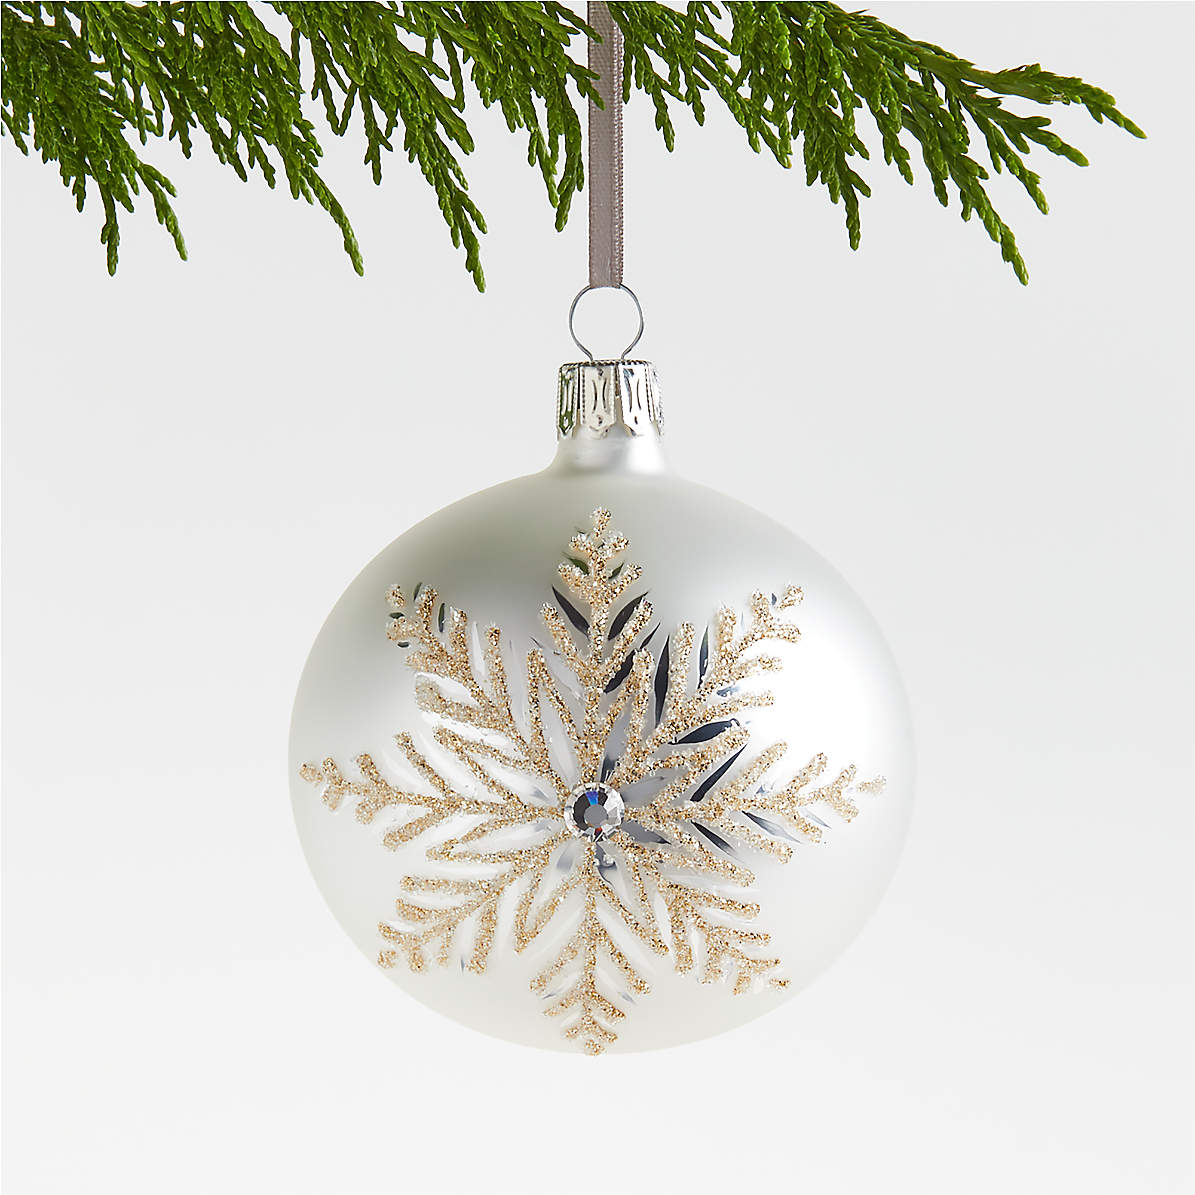 Christmas Silver/Tan Wood Wall Hanging Snowflake Holiday Item